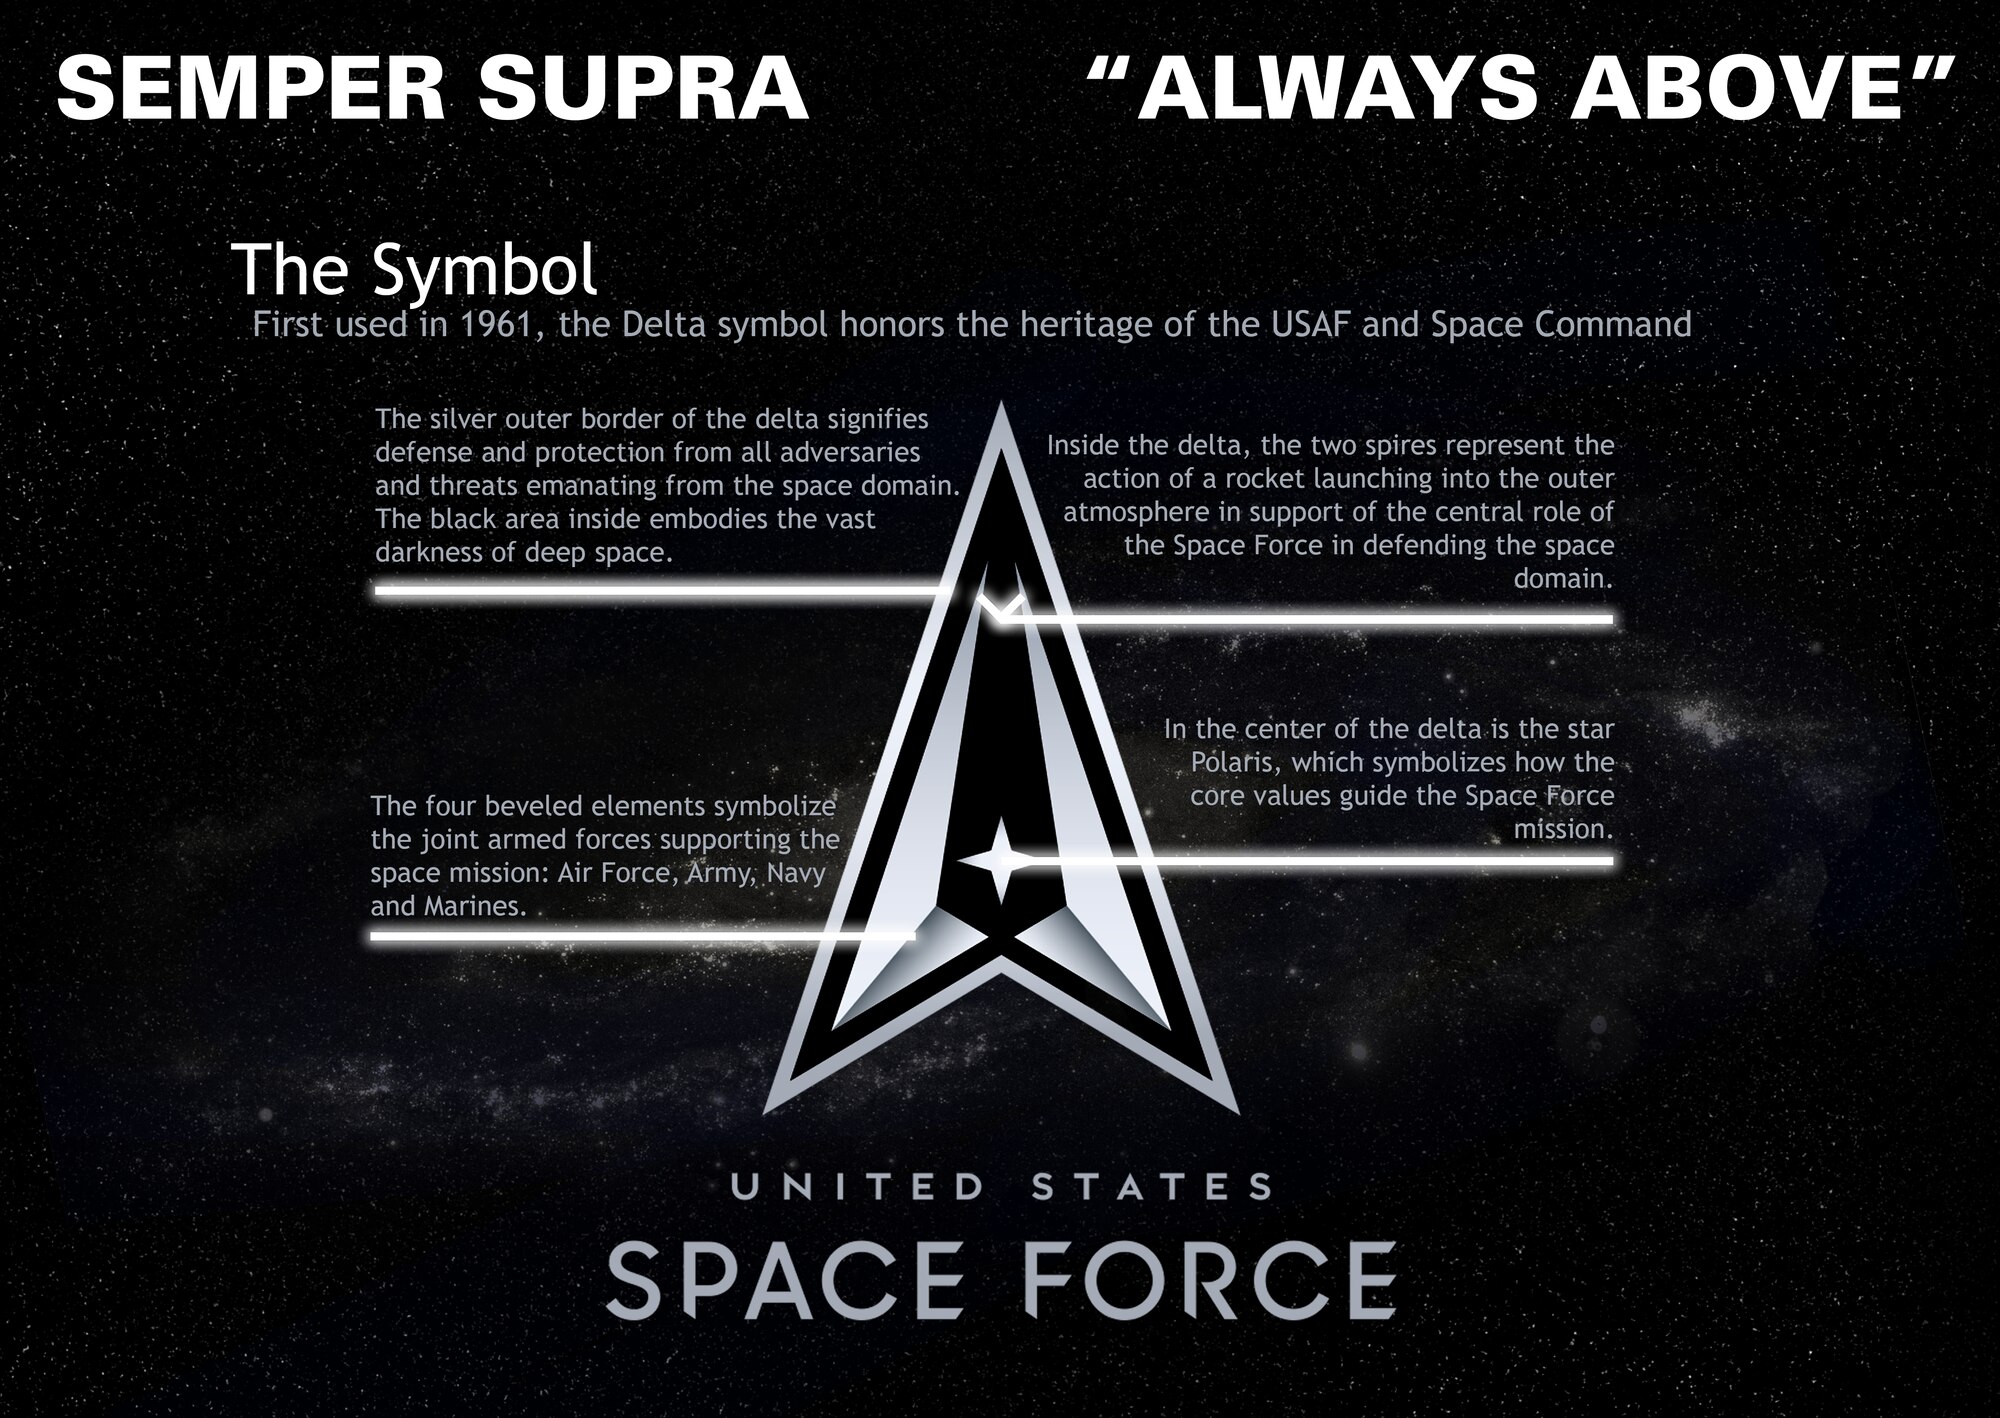 AFA Branding Guide & Logos  Air & Space Forces Association